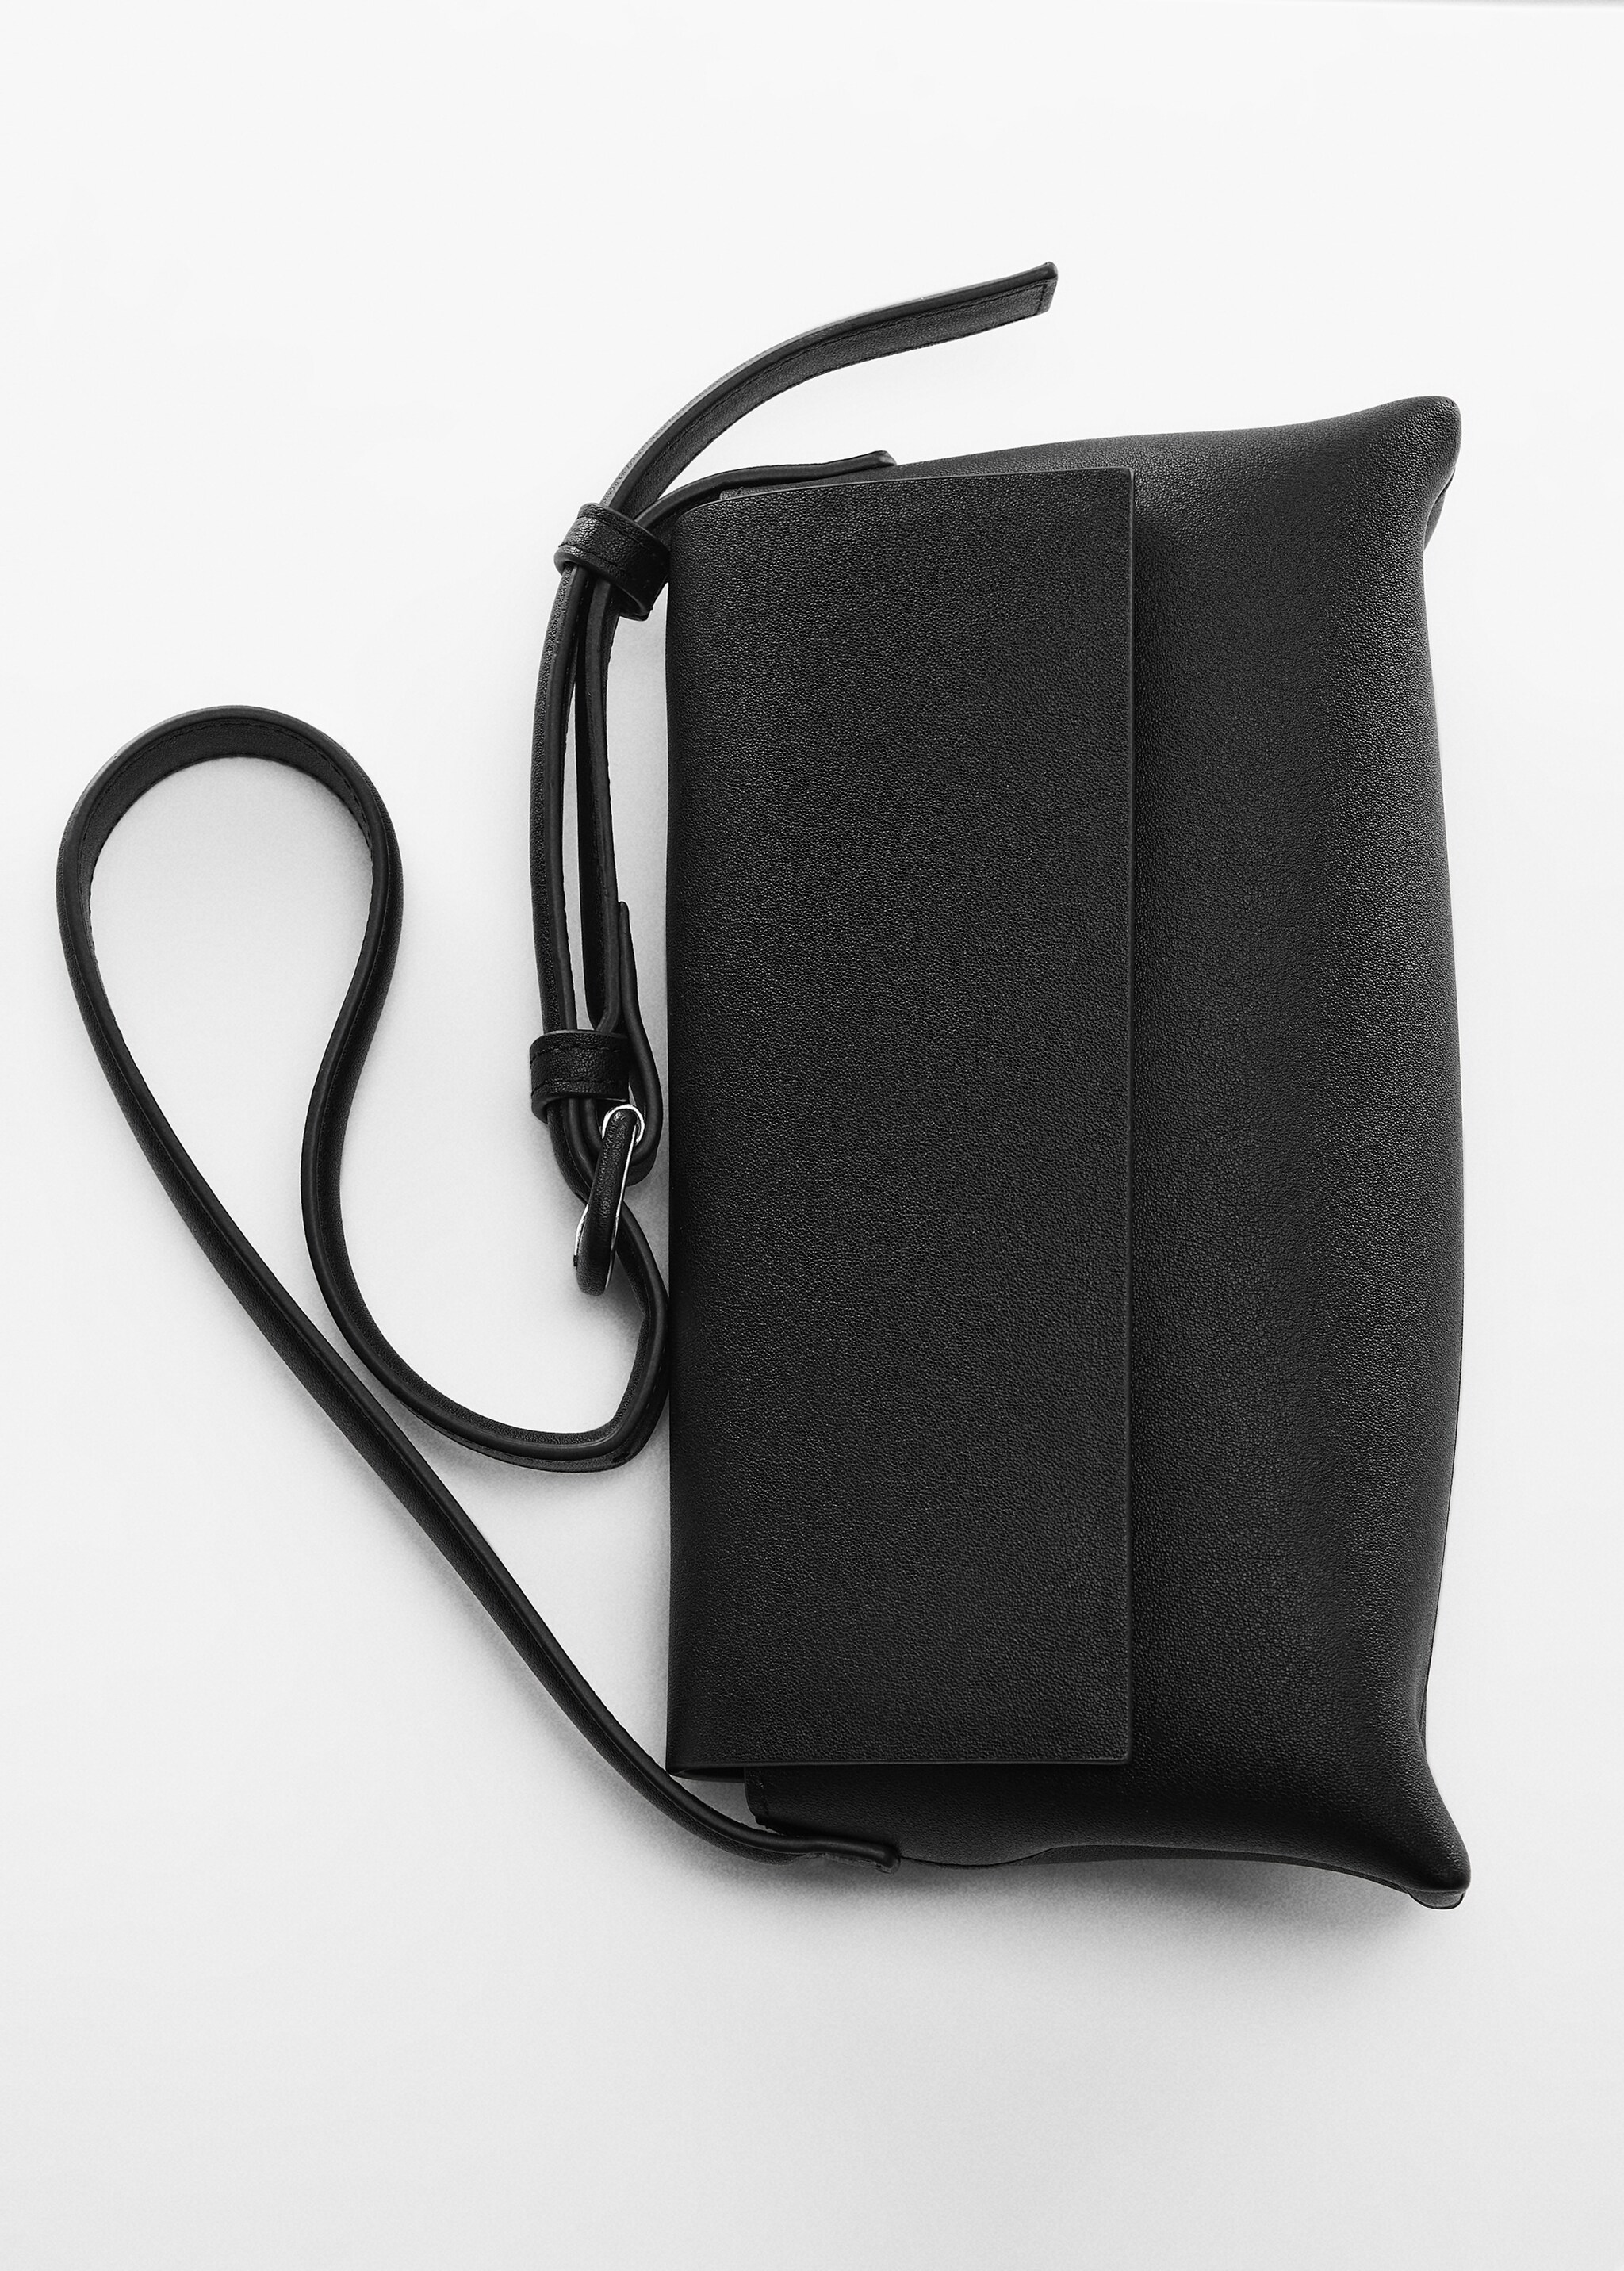 Shoulder bag with strap - Details of the article 5